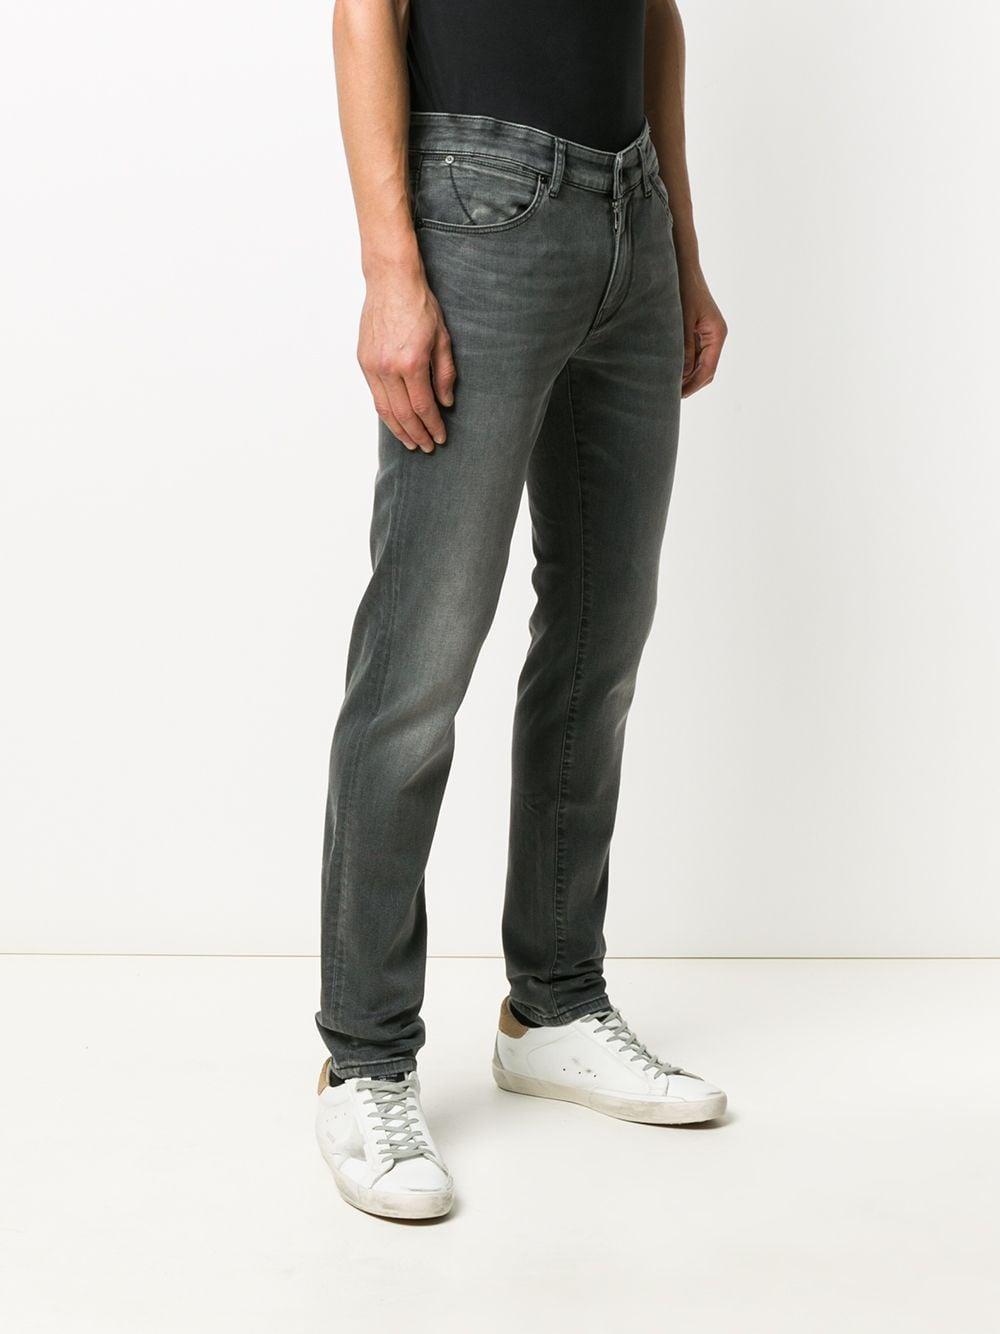 PT01 Denim Slim-fit Jeans in Grey (Gray) for Men - Lyst